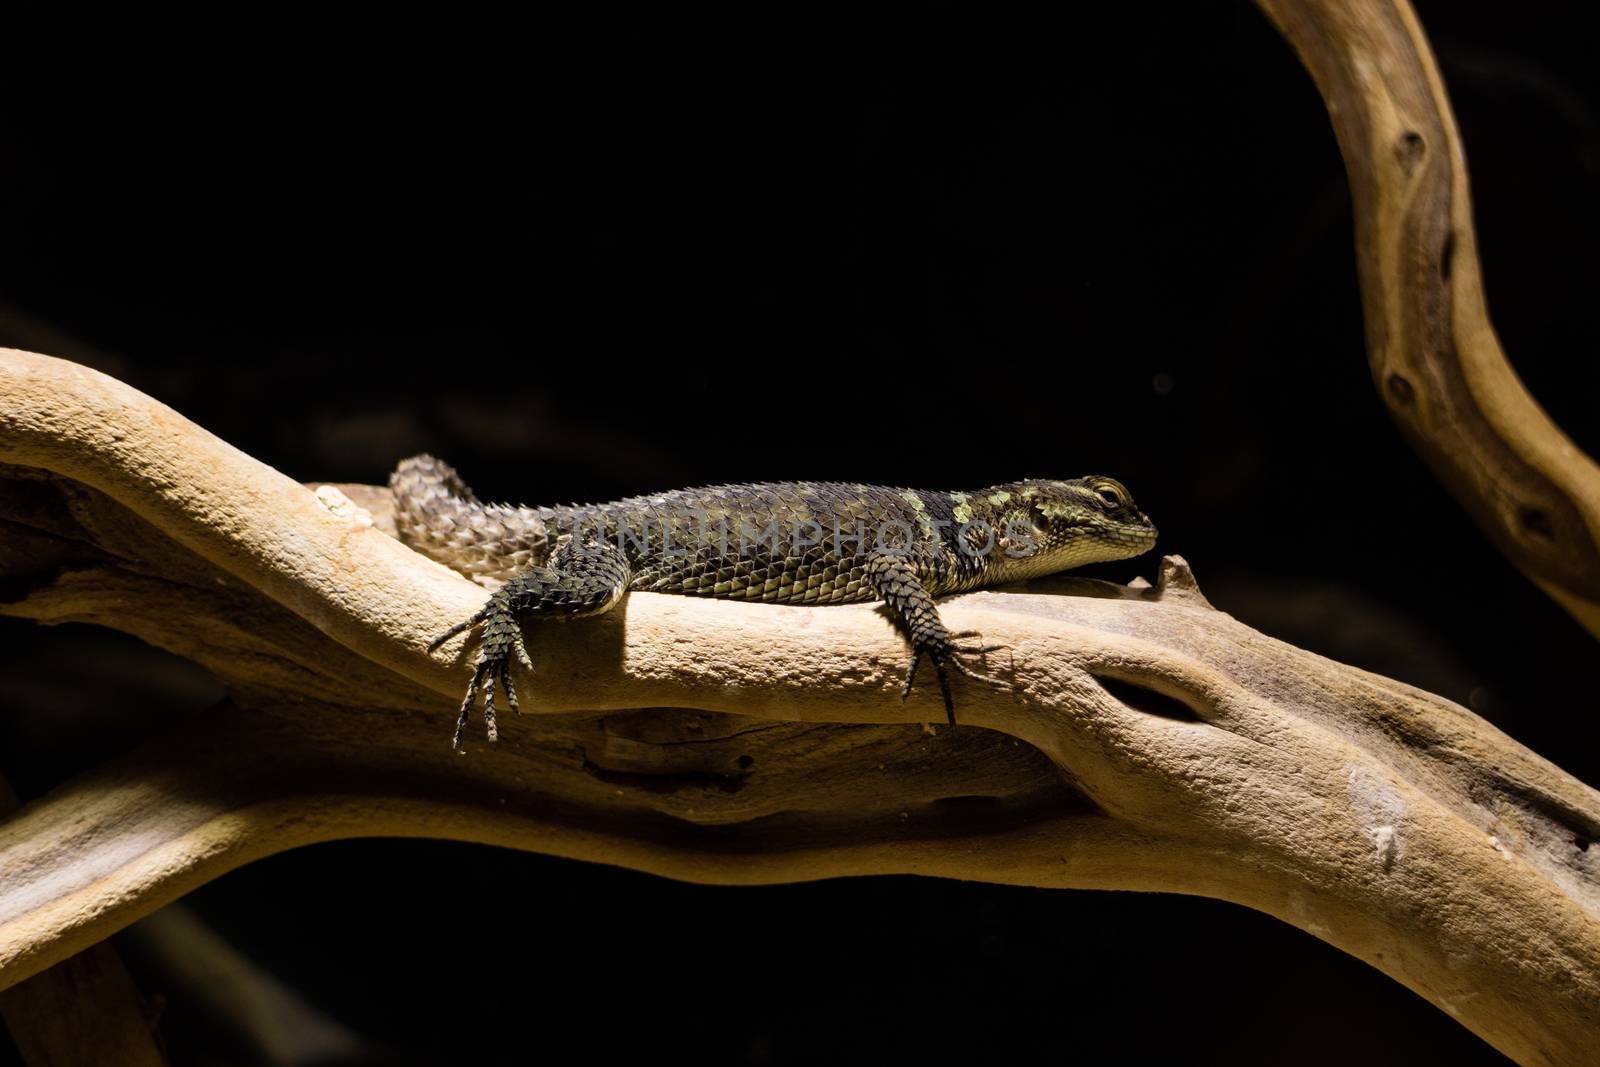 Lizard resting on plant stalk in Zoo.